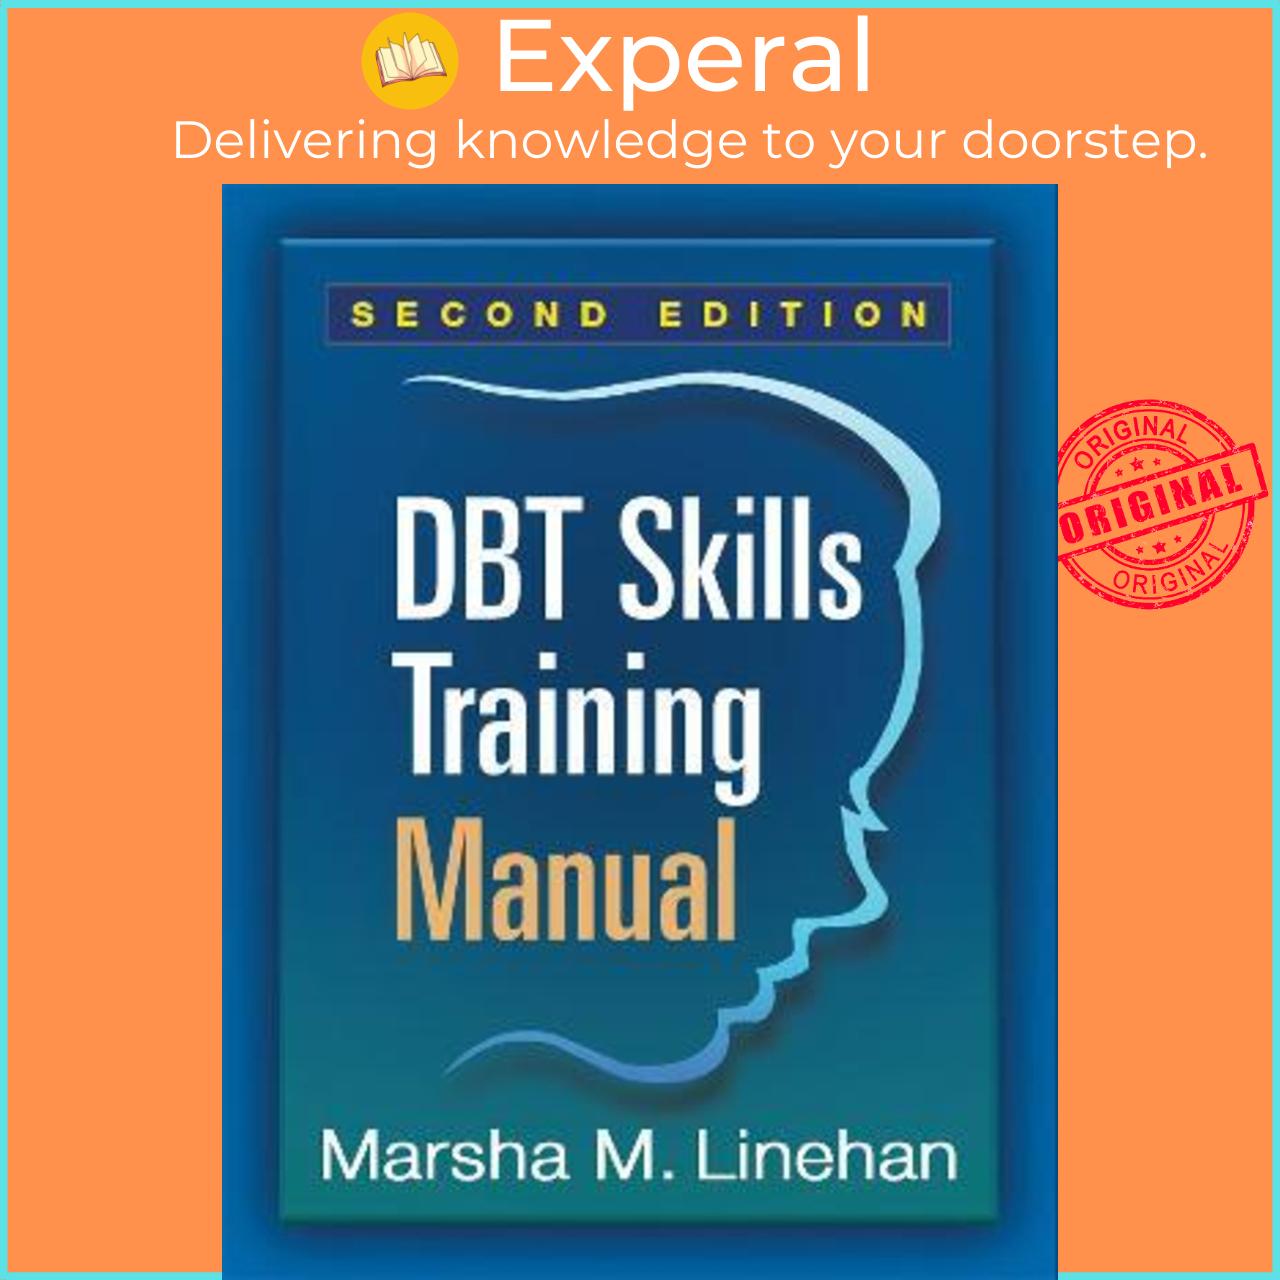 Sách - DBT Skills Training Manual by Marsha M. Linehan (US edition, paperback)